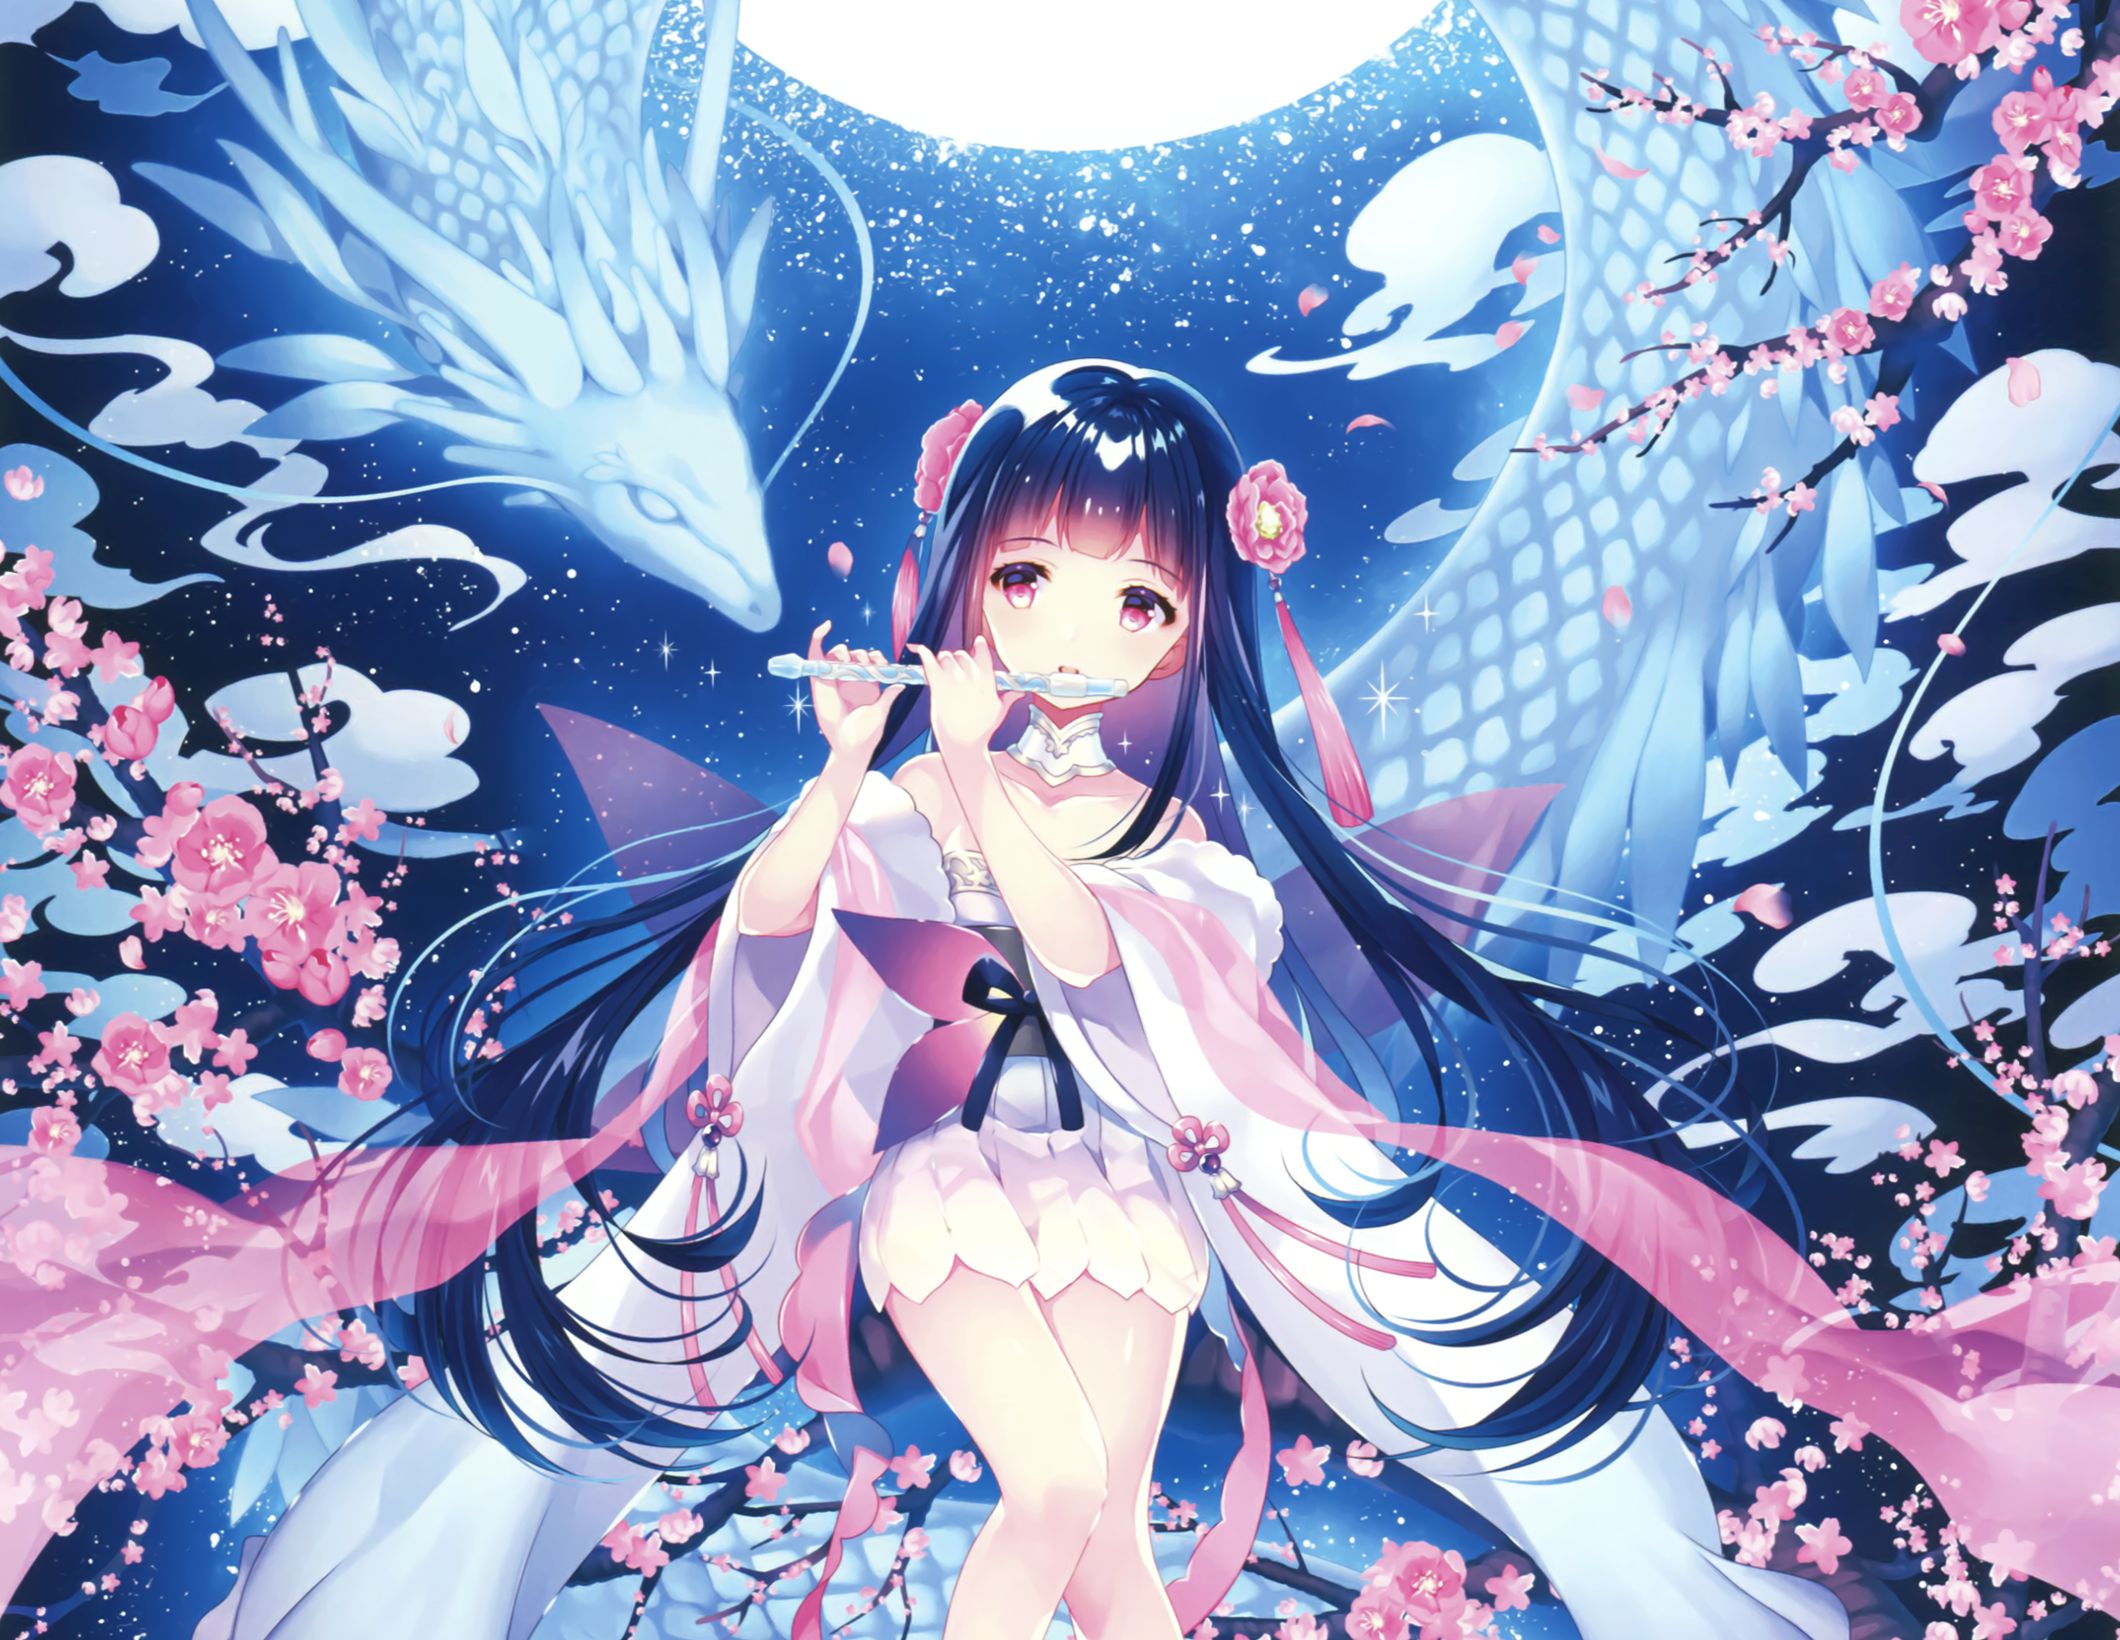 910944 descargar imagen animado, original, pelo negro, flor de cerezo, flauta, kimono, pelo largo, luna, ojos rosados: fondos de pantalla y protectores de pantalla gratis